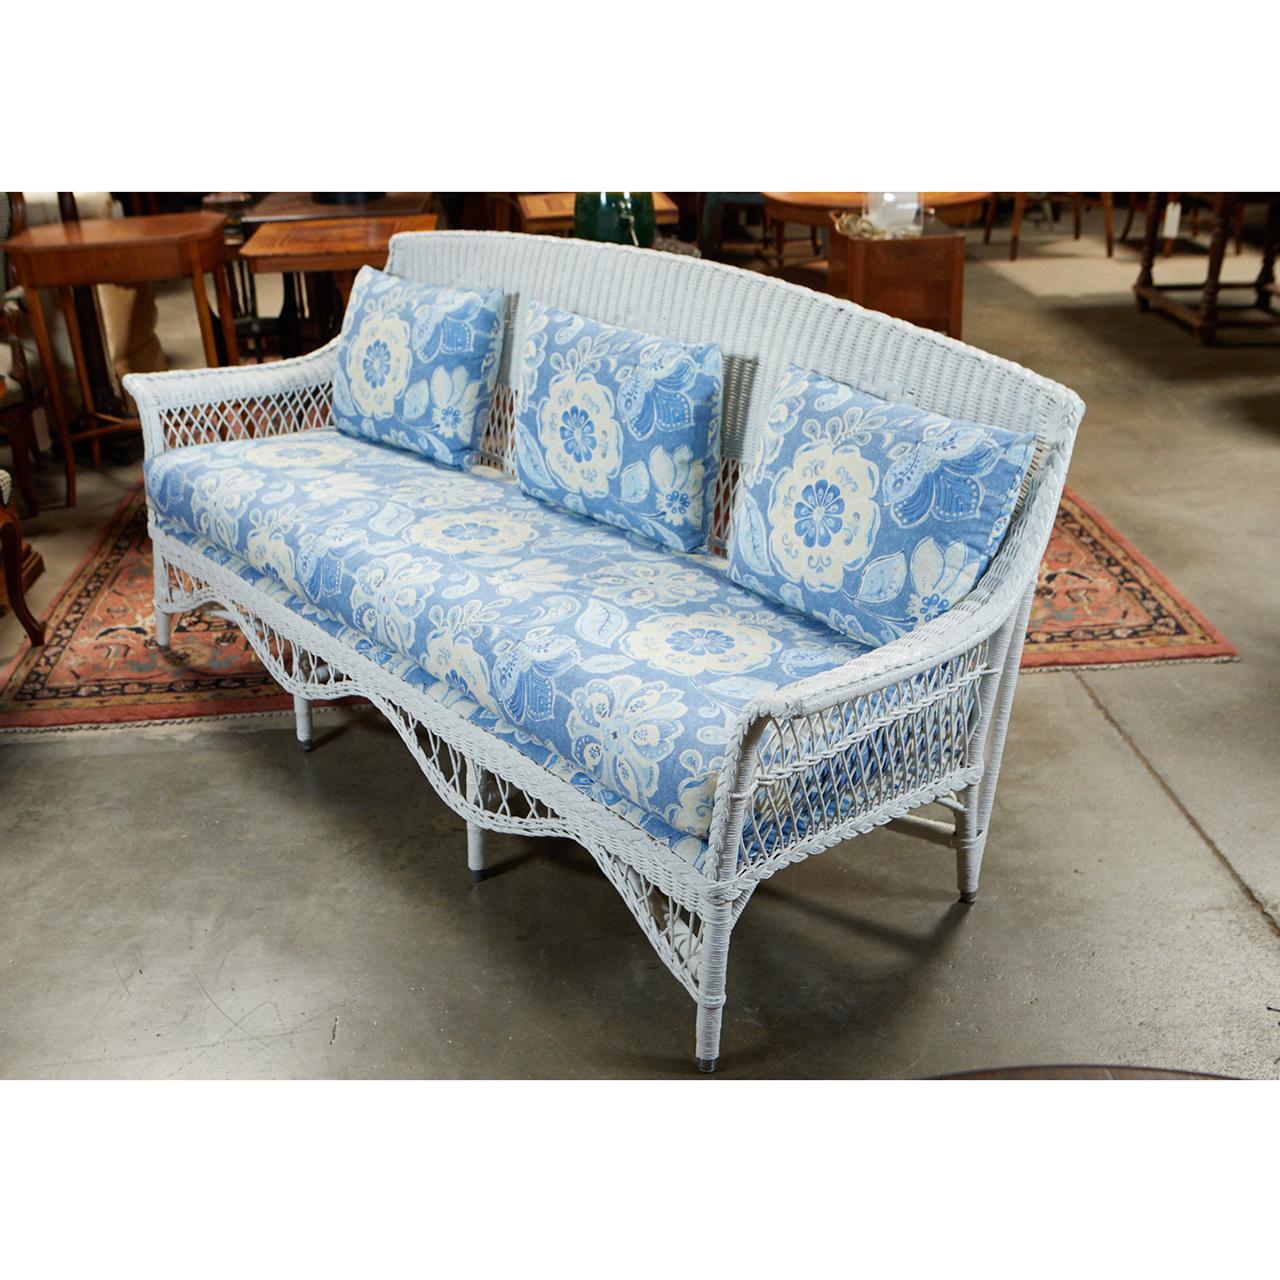 Bar Harbor Wicker Sofa In Good Condition For Sale In Culver City, CA